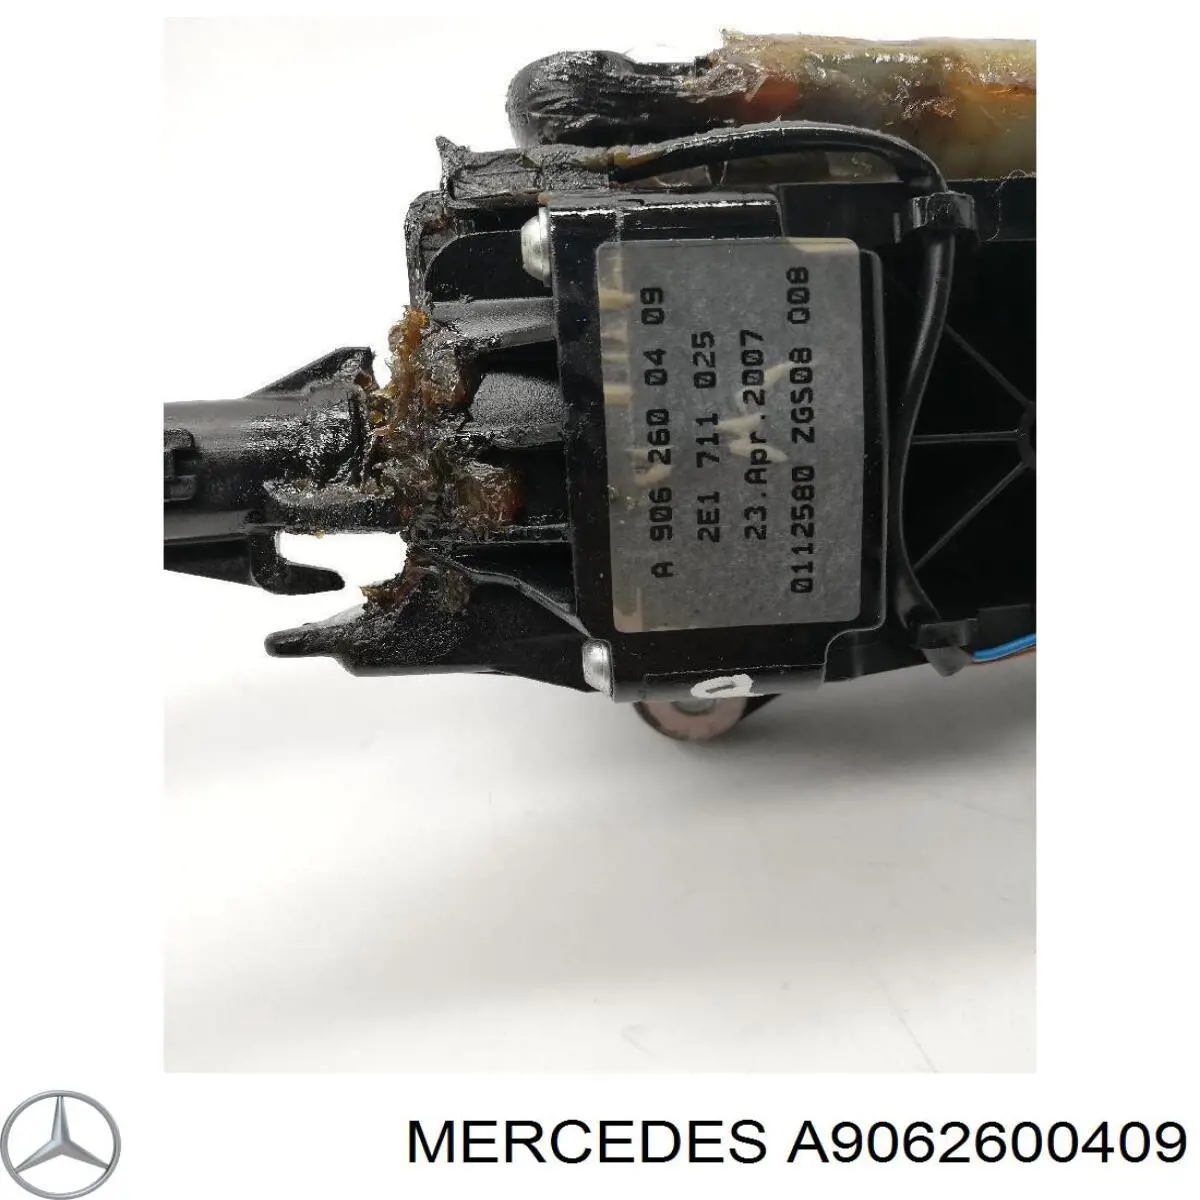 A9062600409 Mercedes palanca de selectora de cambios